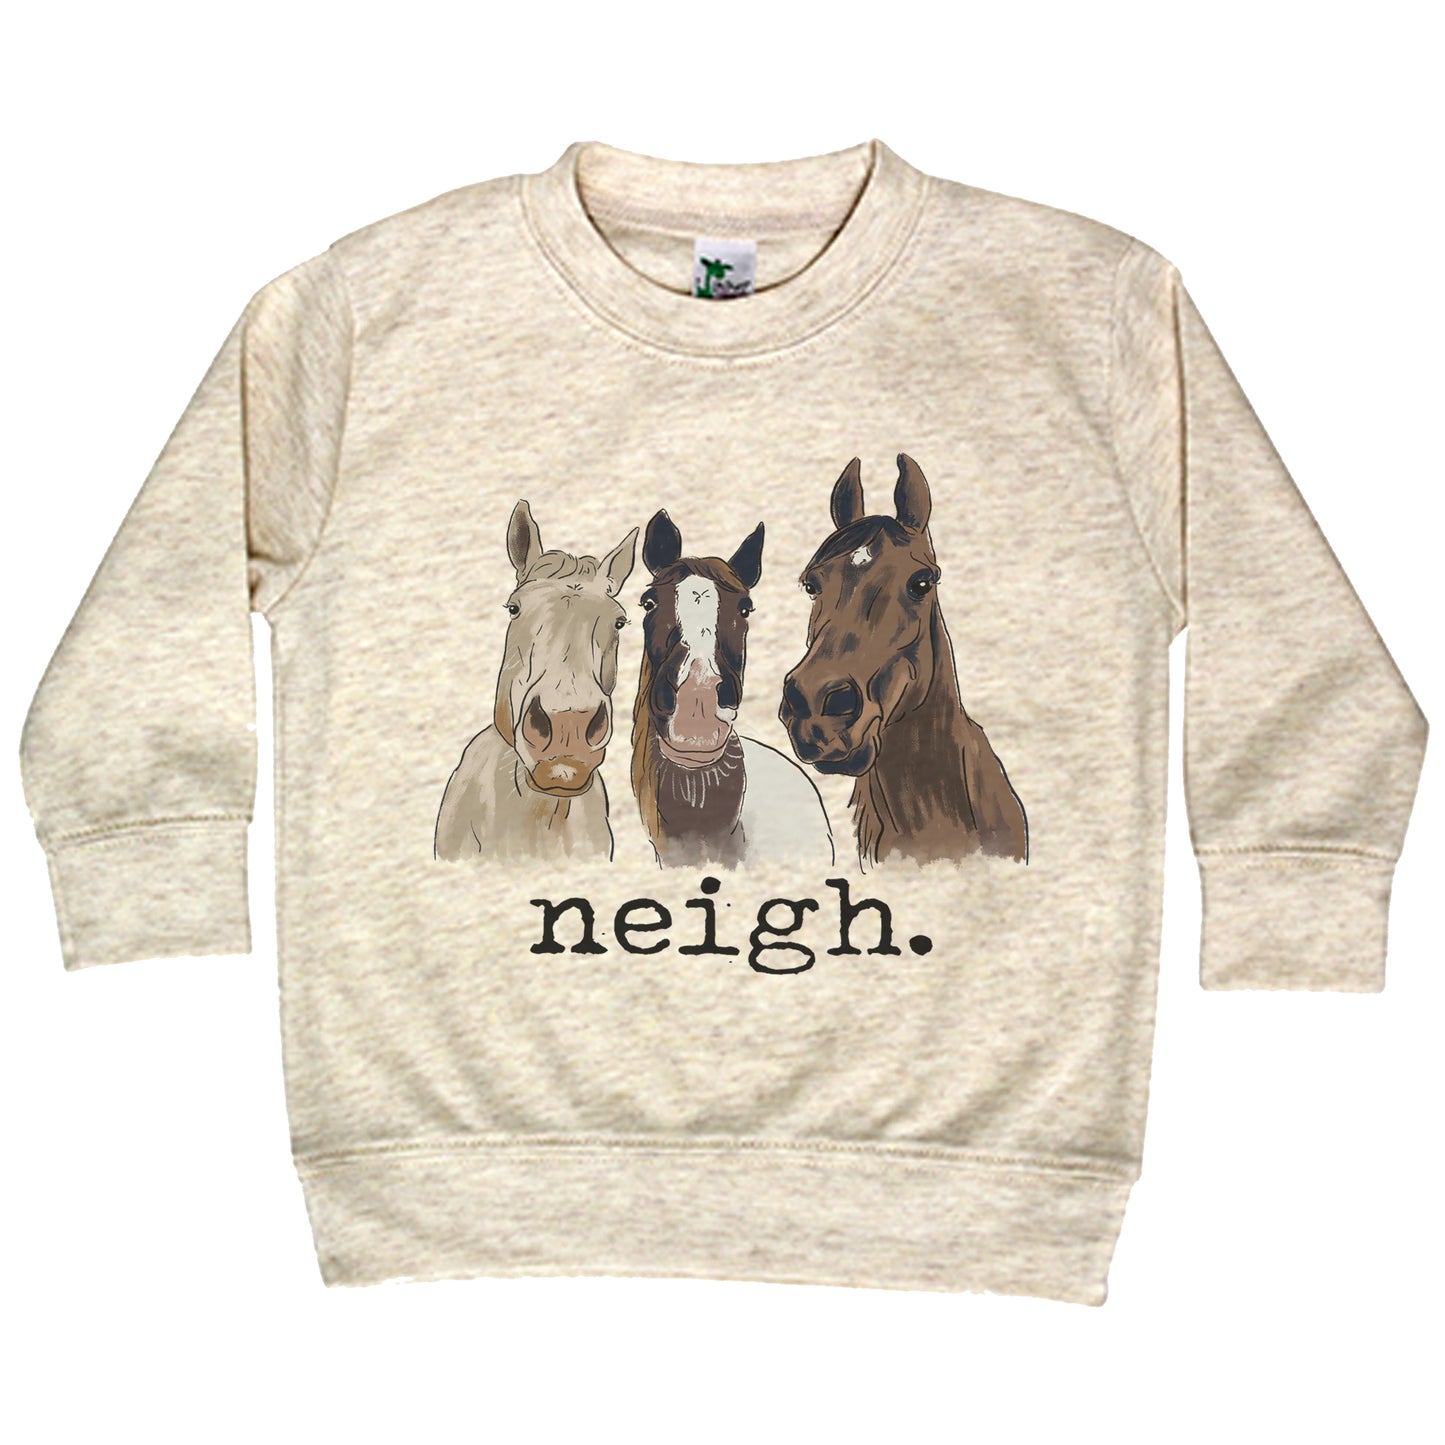 "Neigh" Barn Life Sleep 'n Play Set | Size 2T through 5T | Includes Shirt & Joggers